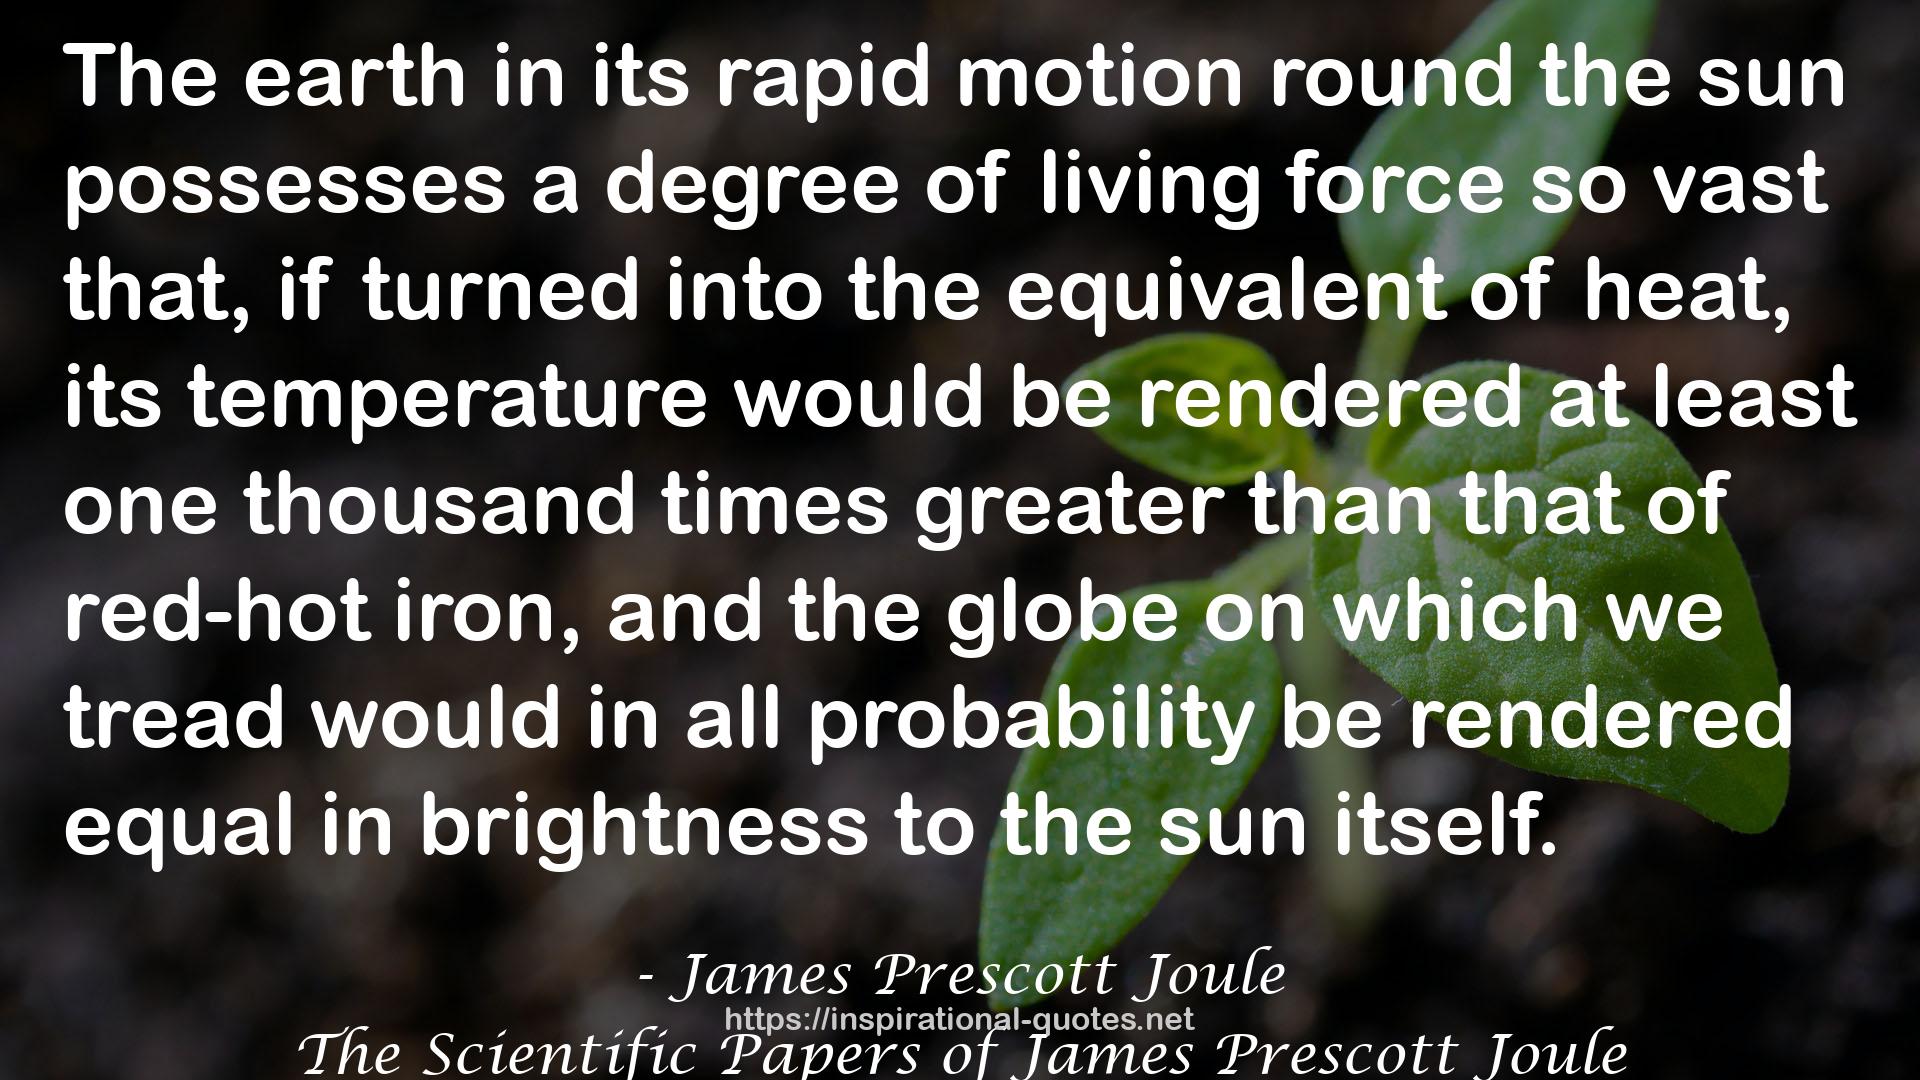 The Scientific Papers of James Prescott Joule QUOTES